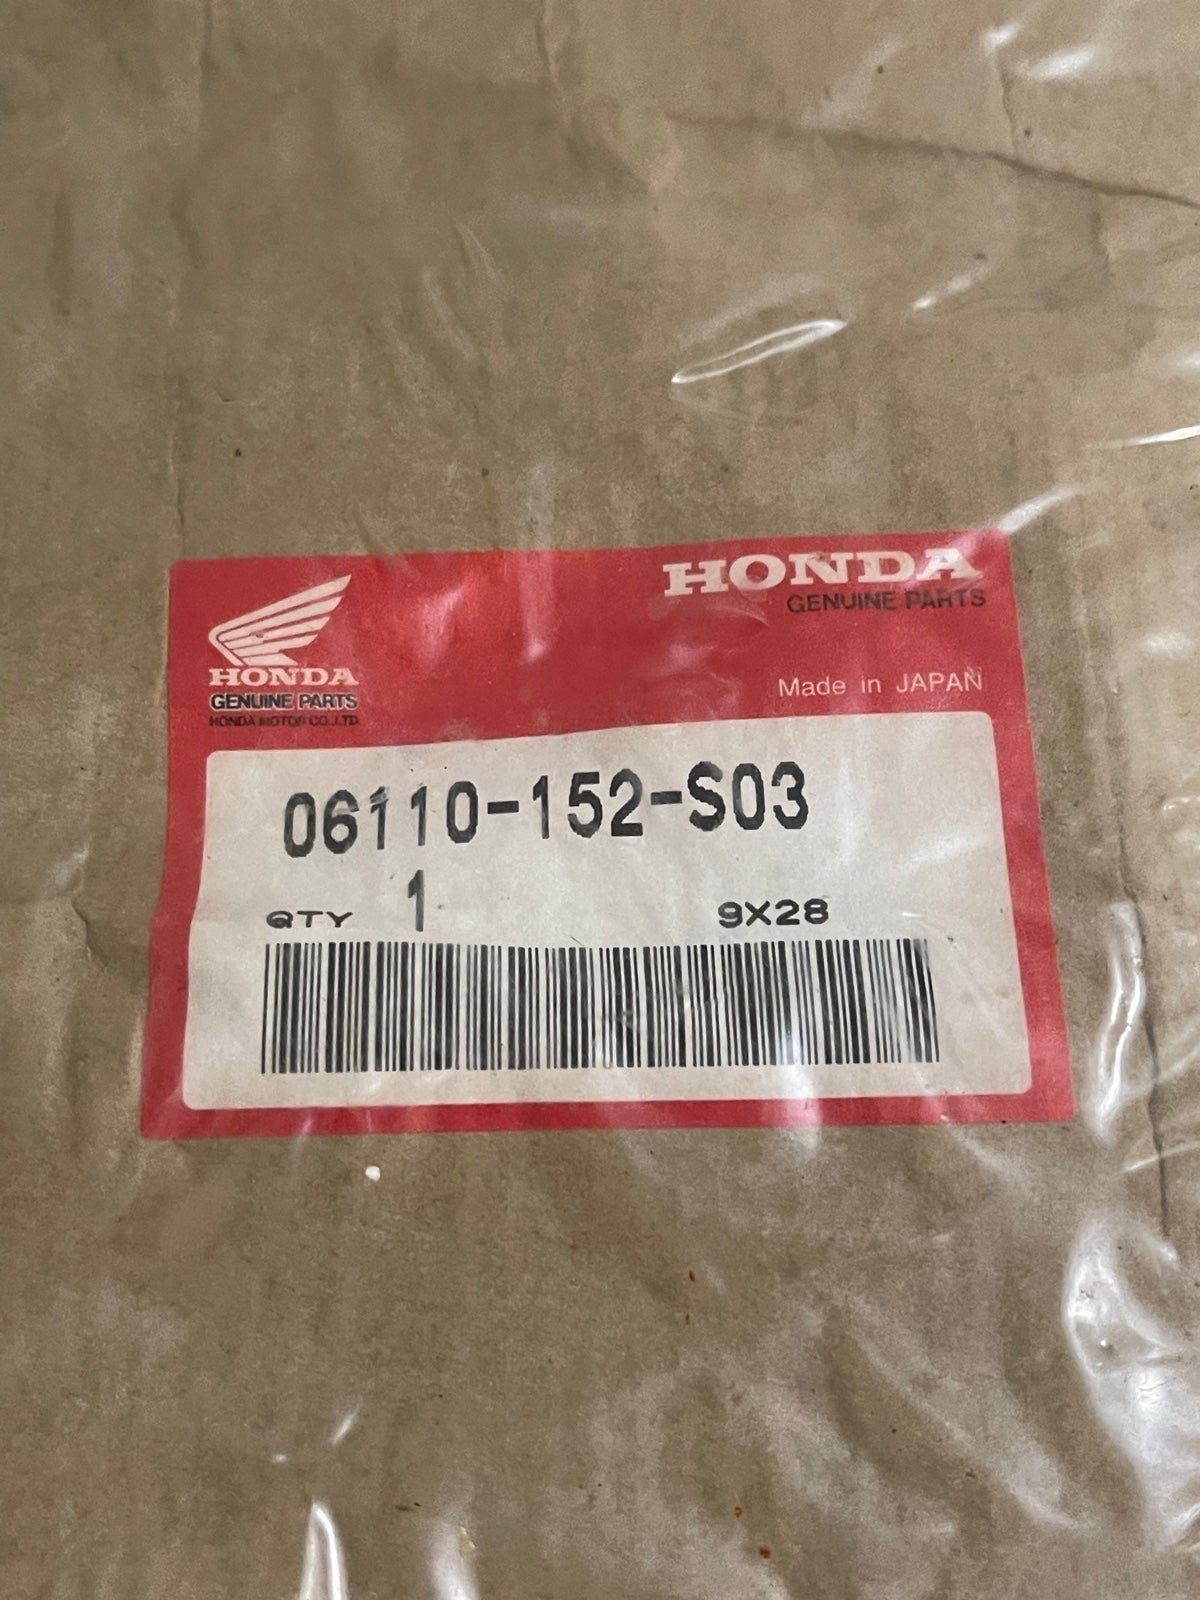 NOS Genuine OEM Honda Gasket Kit Set 06110-152-S03 GIvAE7hWw